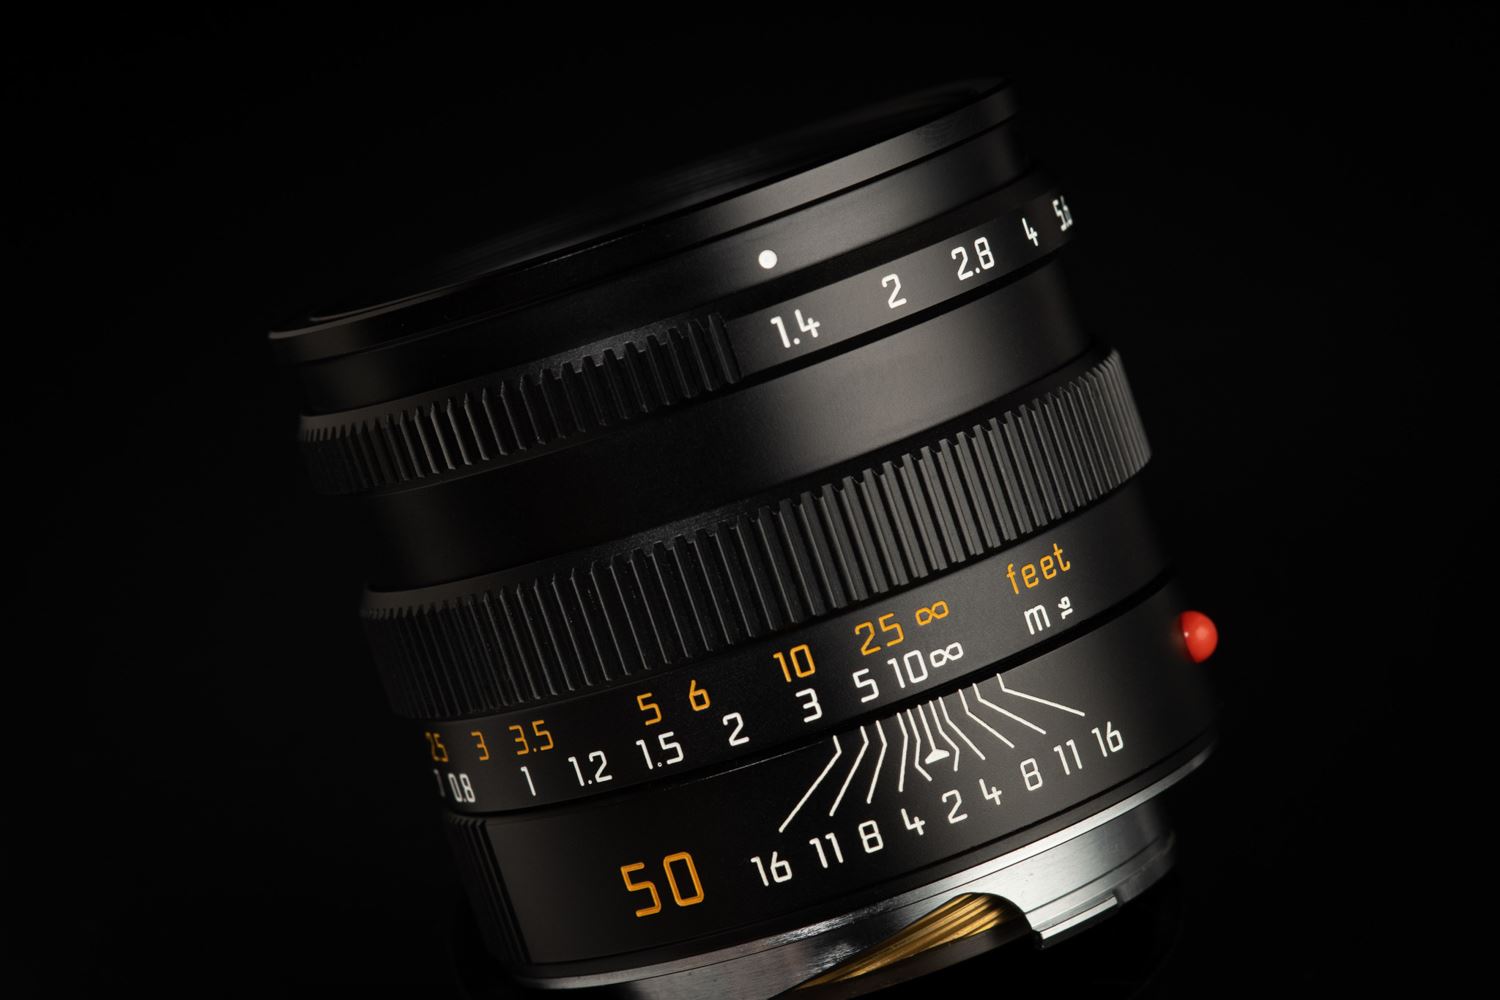 Picture of Leica Summilux-M 50mm f/1.4 Ver.3 Pre-ASPH Black